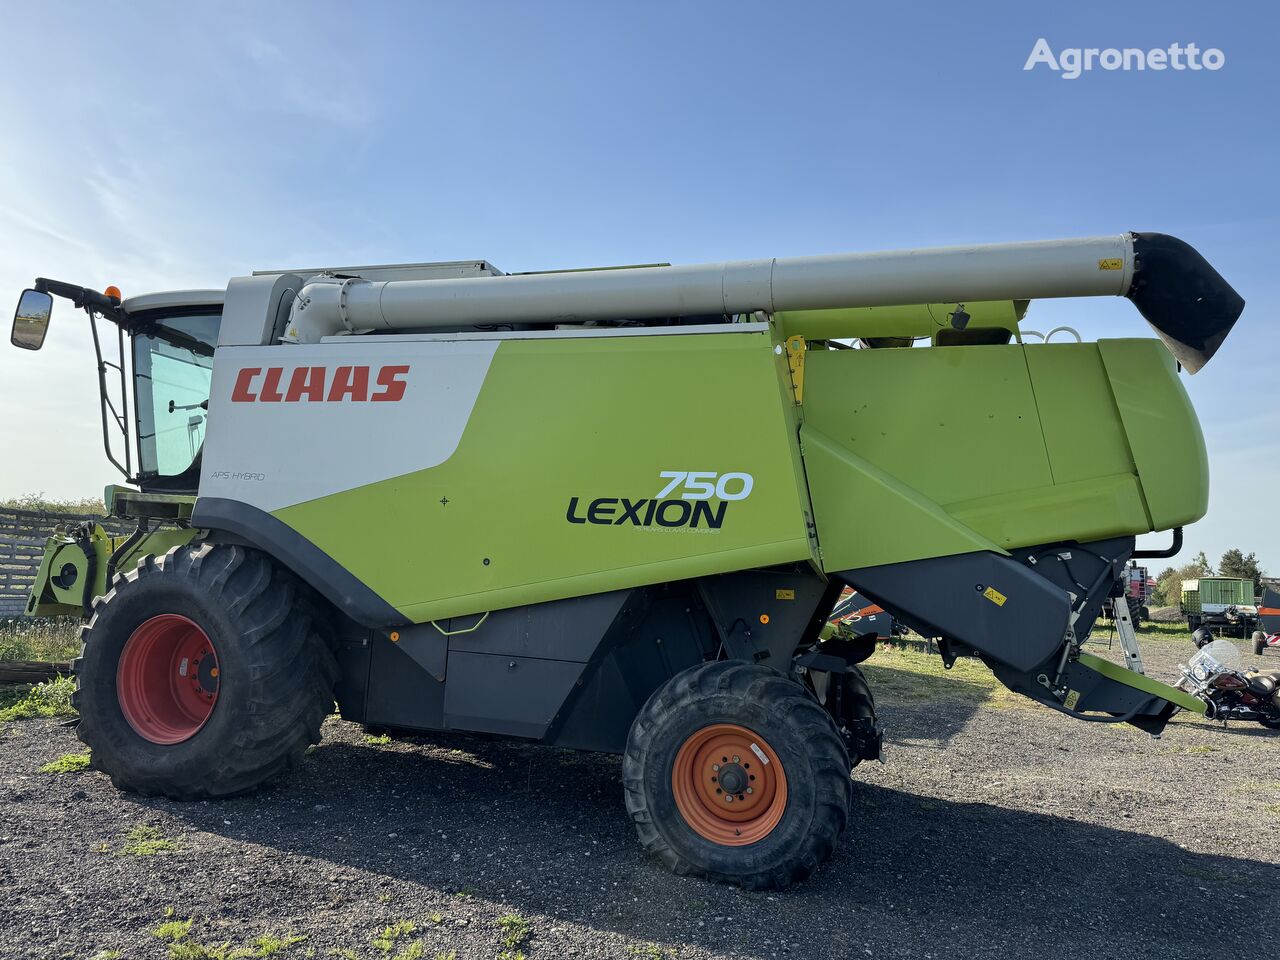 Claas Lexion750 grain harvester